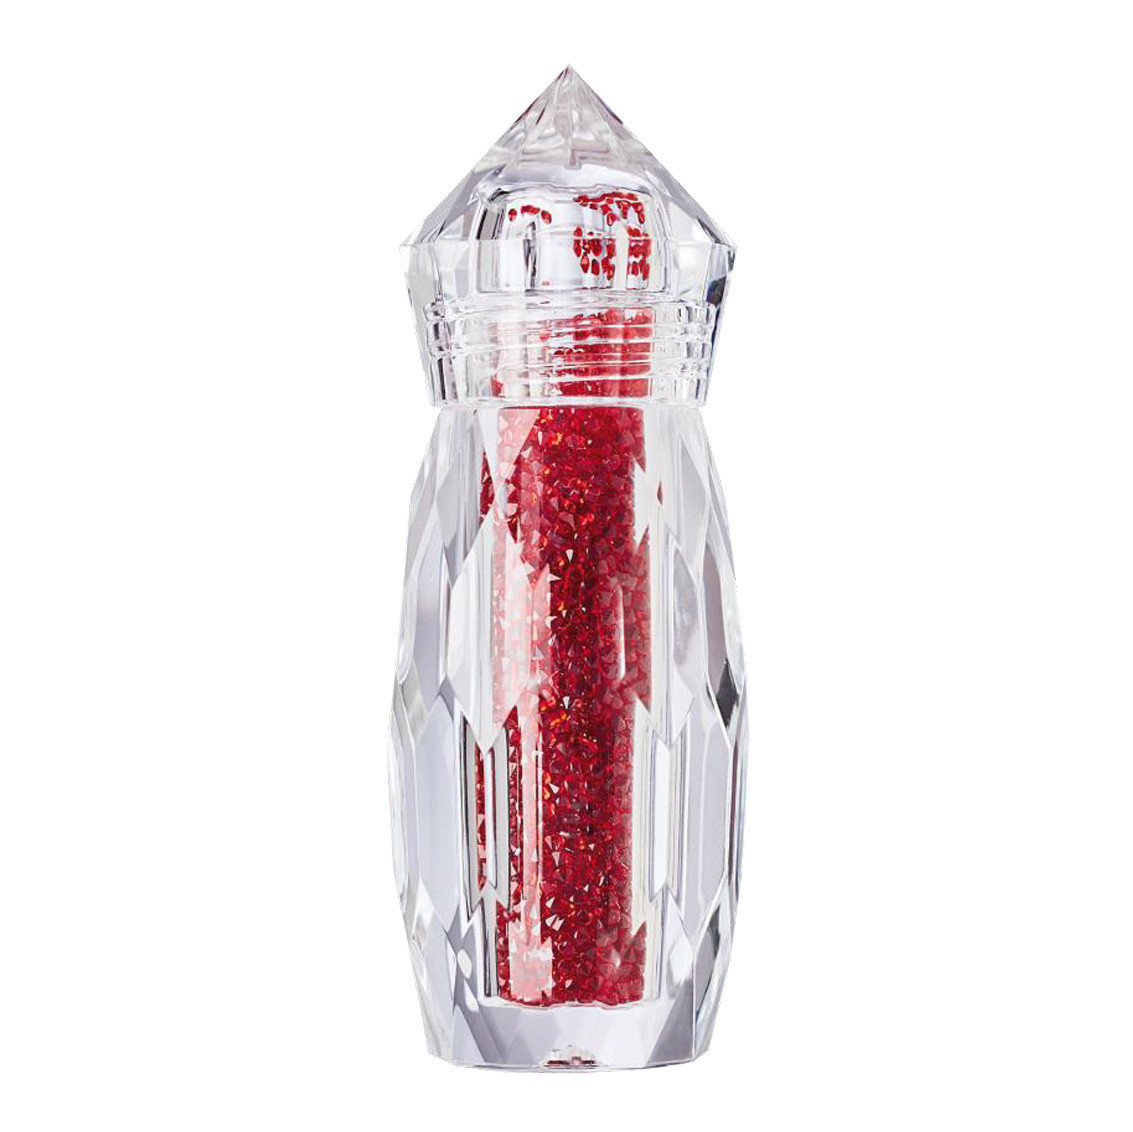 Nail Art Jewels set Swarovski® Crystalpixie Red Touch with nail polish